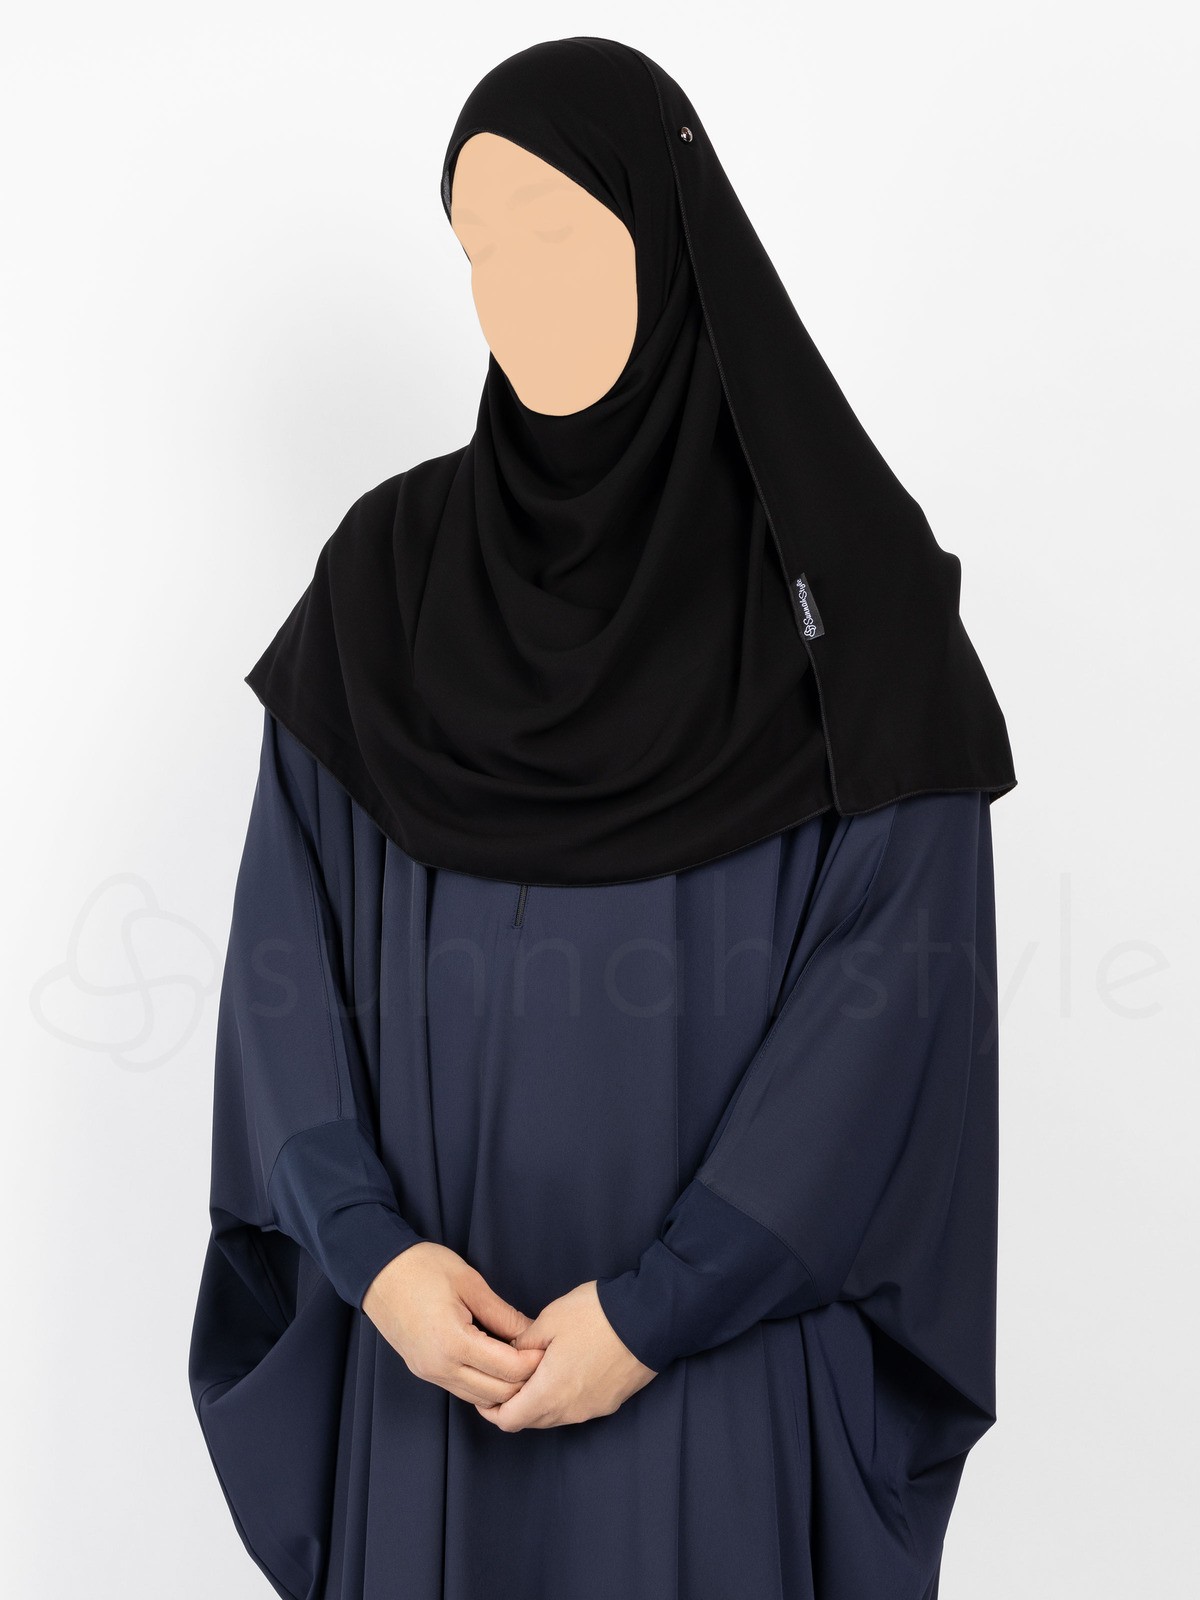 Sunnah Style - Essentials Shayla (Premium Chiffon) - Standard (Black)